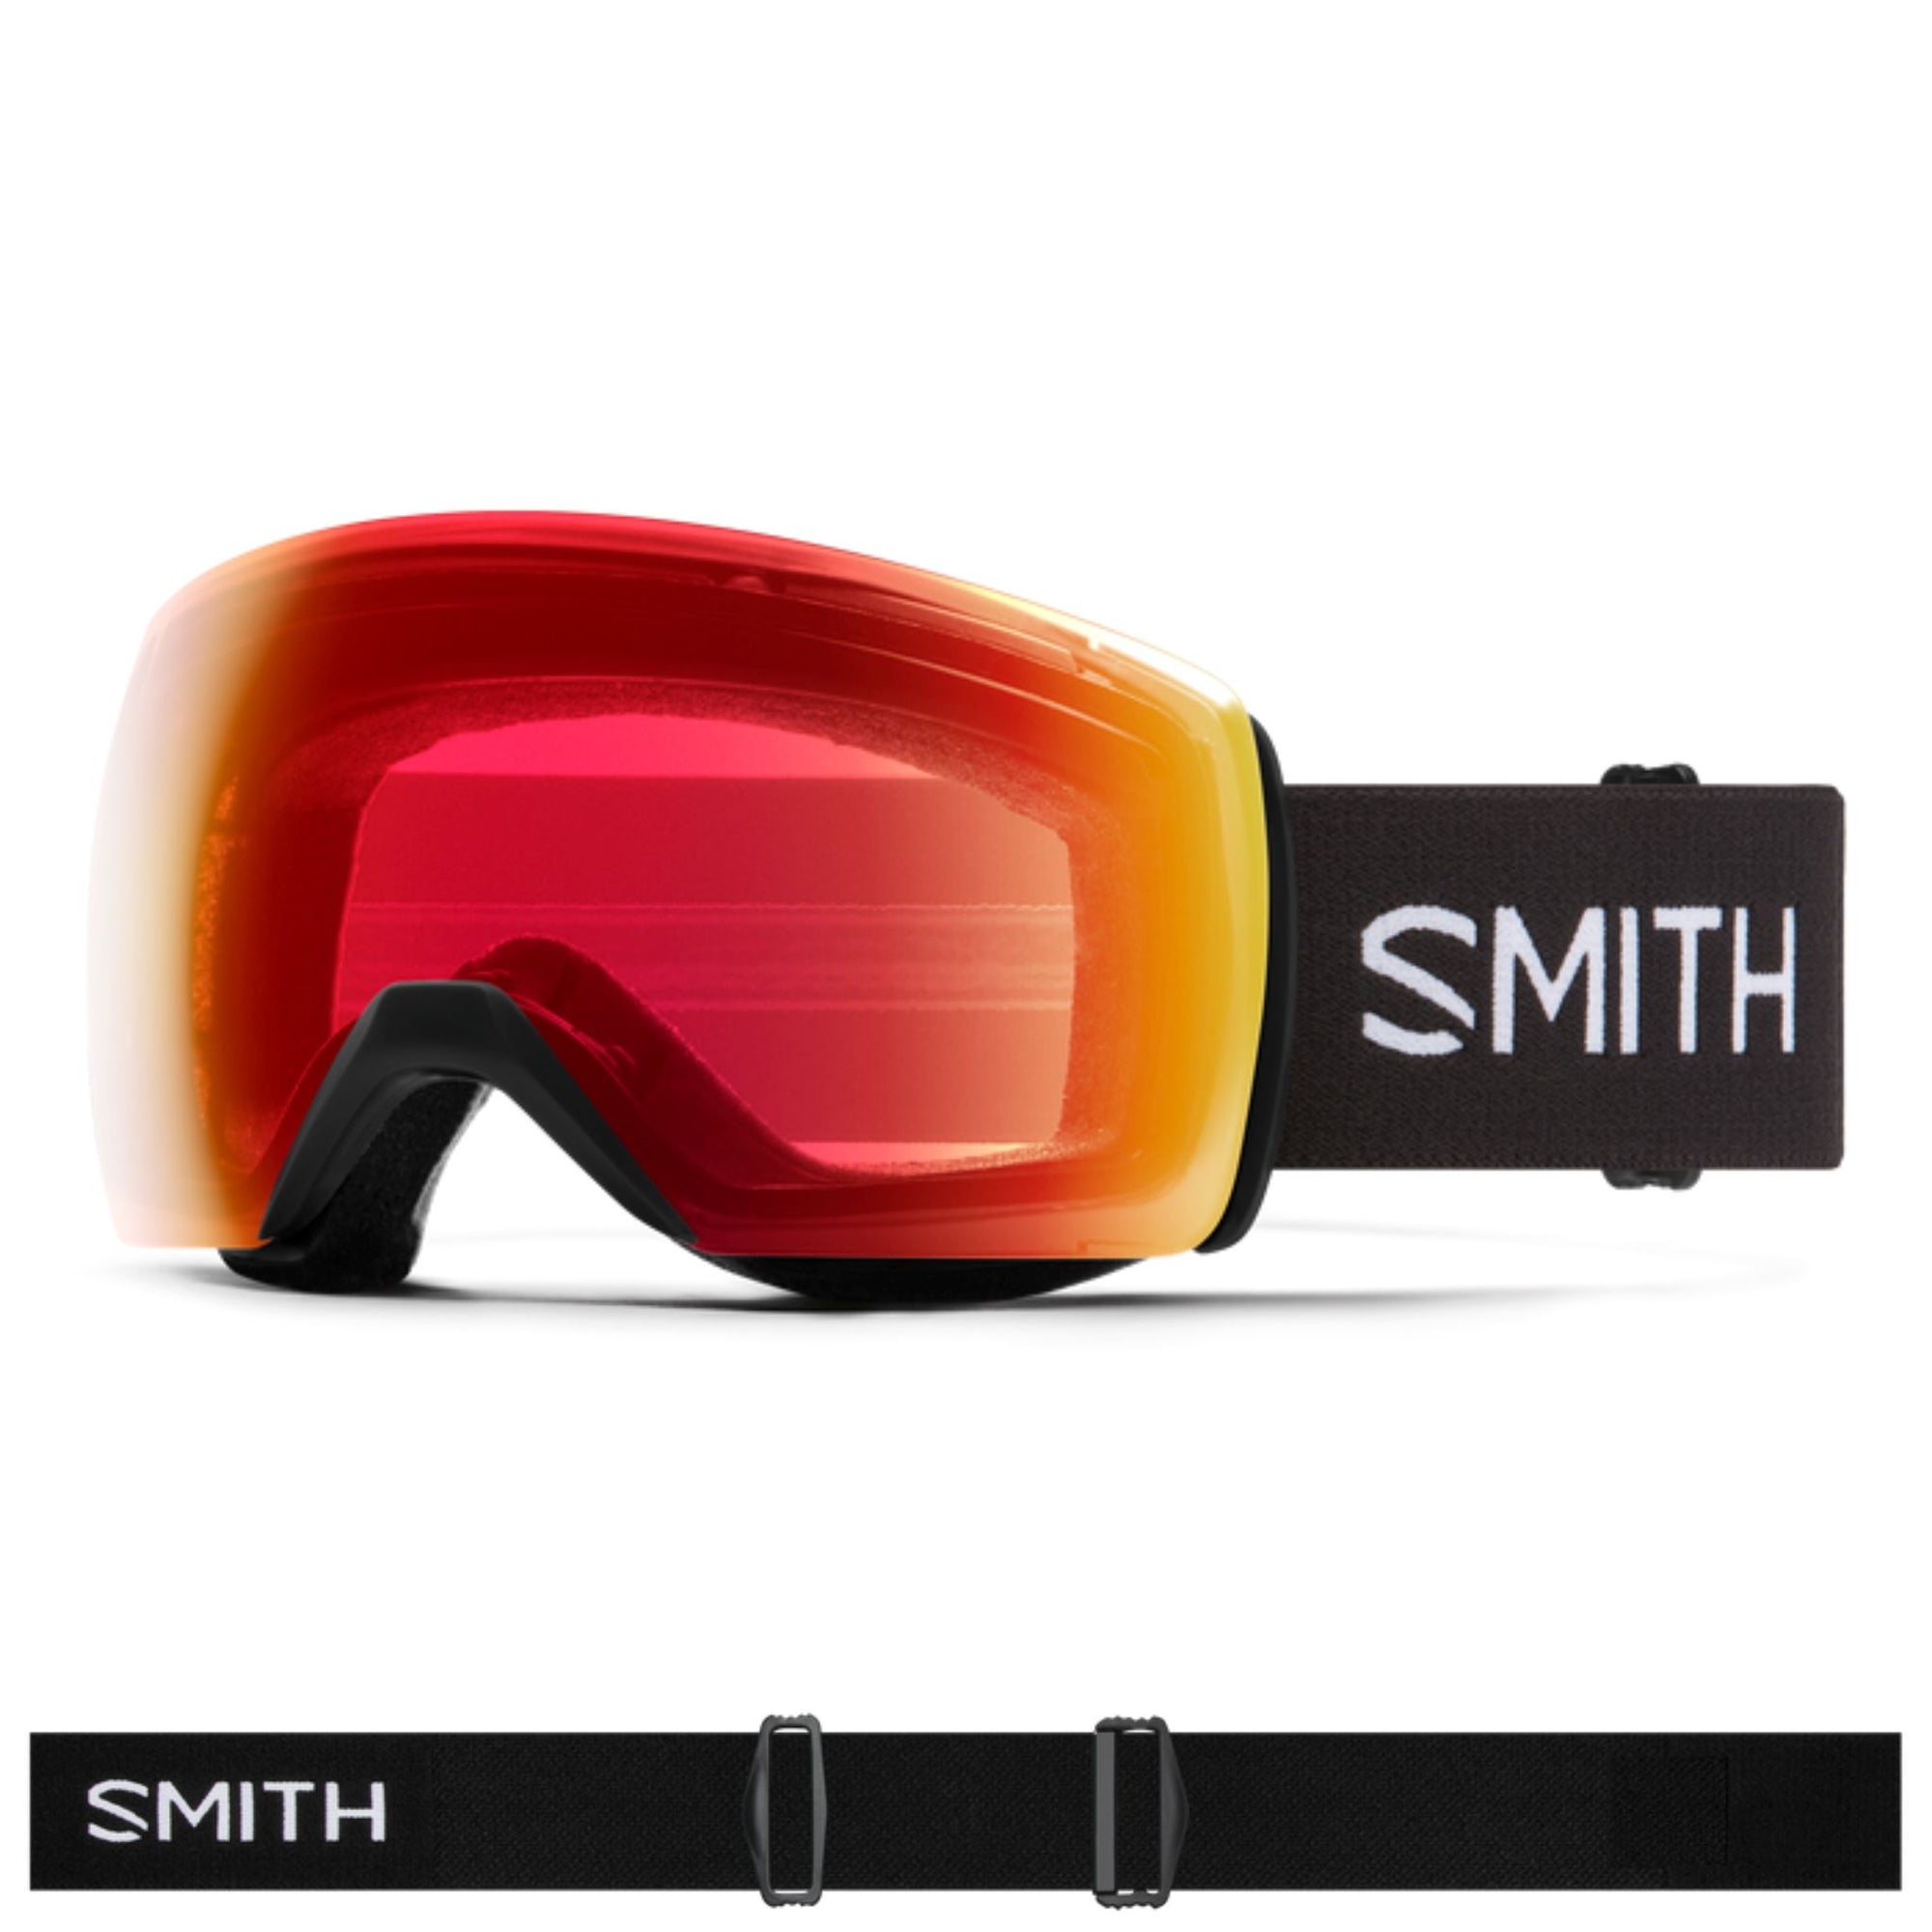 Smith Skyline XL Goggles (Large Fit) - Black ChromaPop Photochromic Red Mirror Goggles Smith 